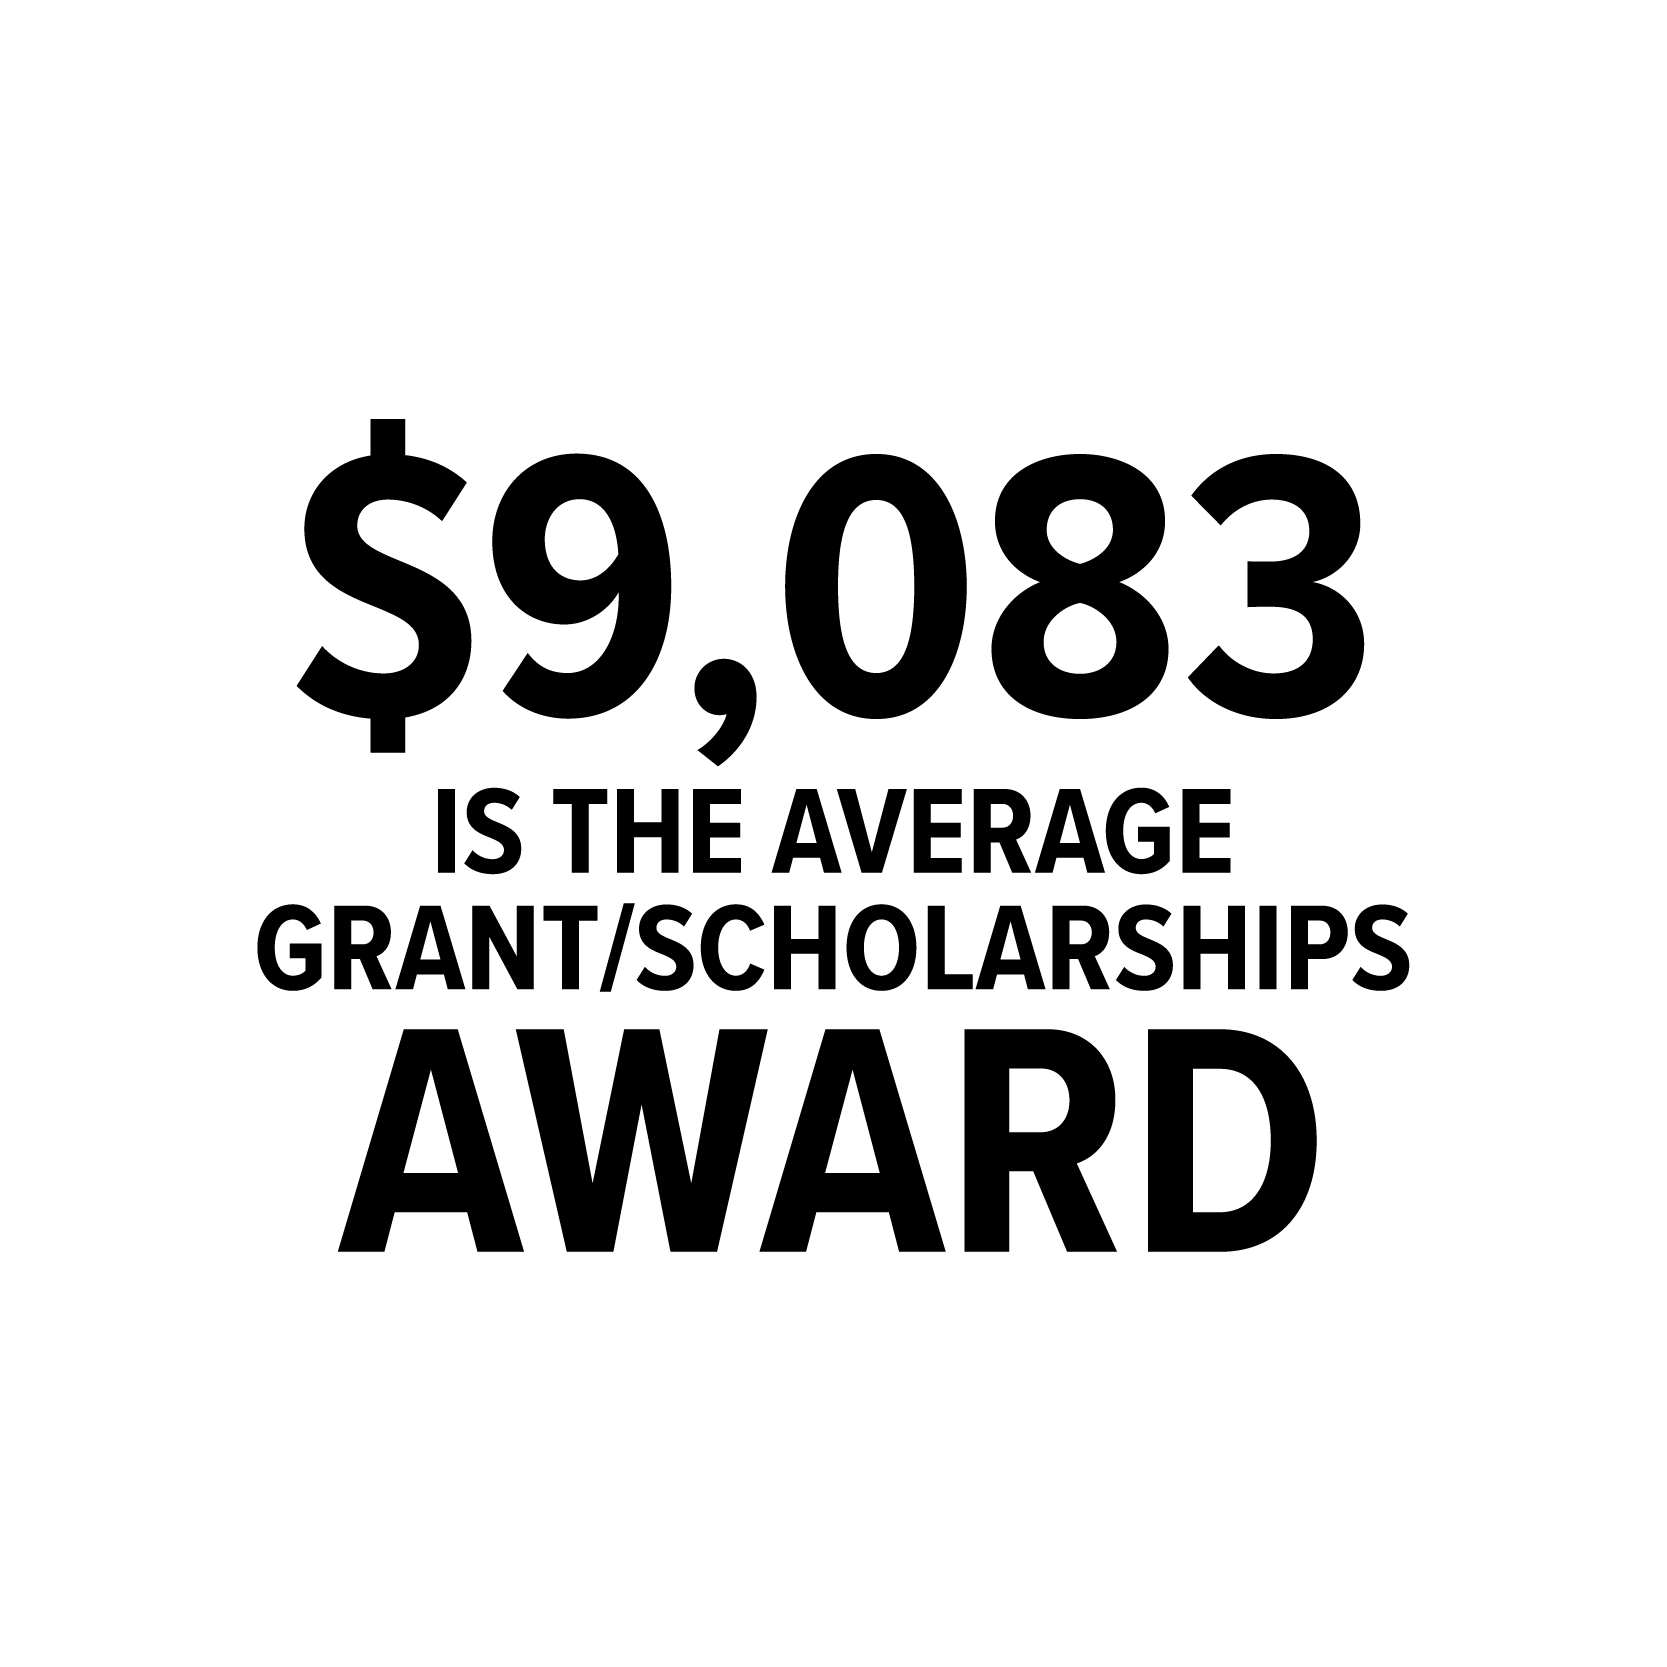 9083 is the average grant/scholarships award